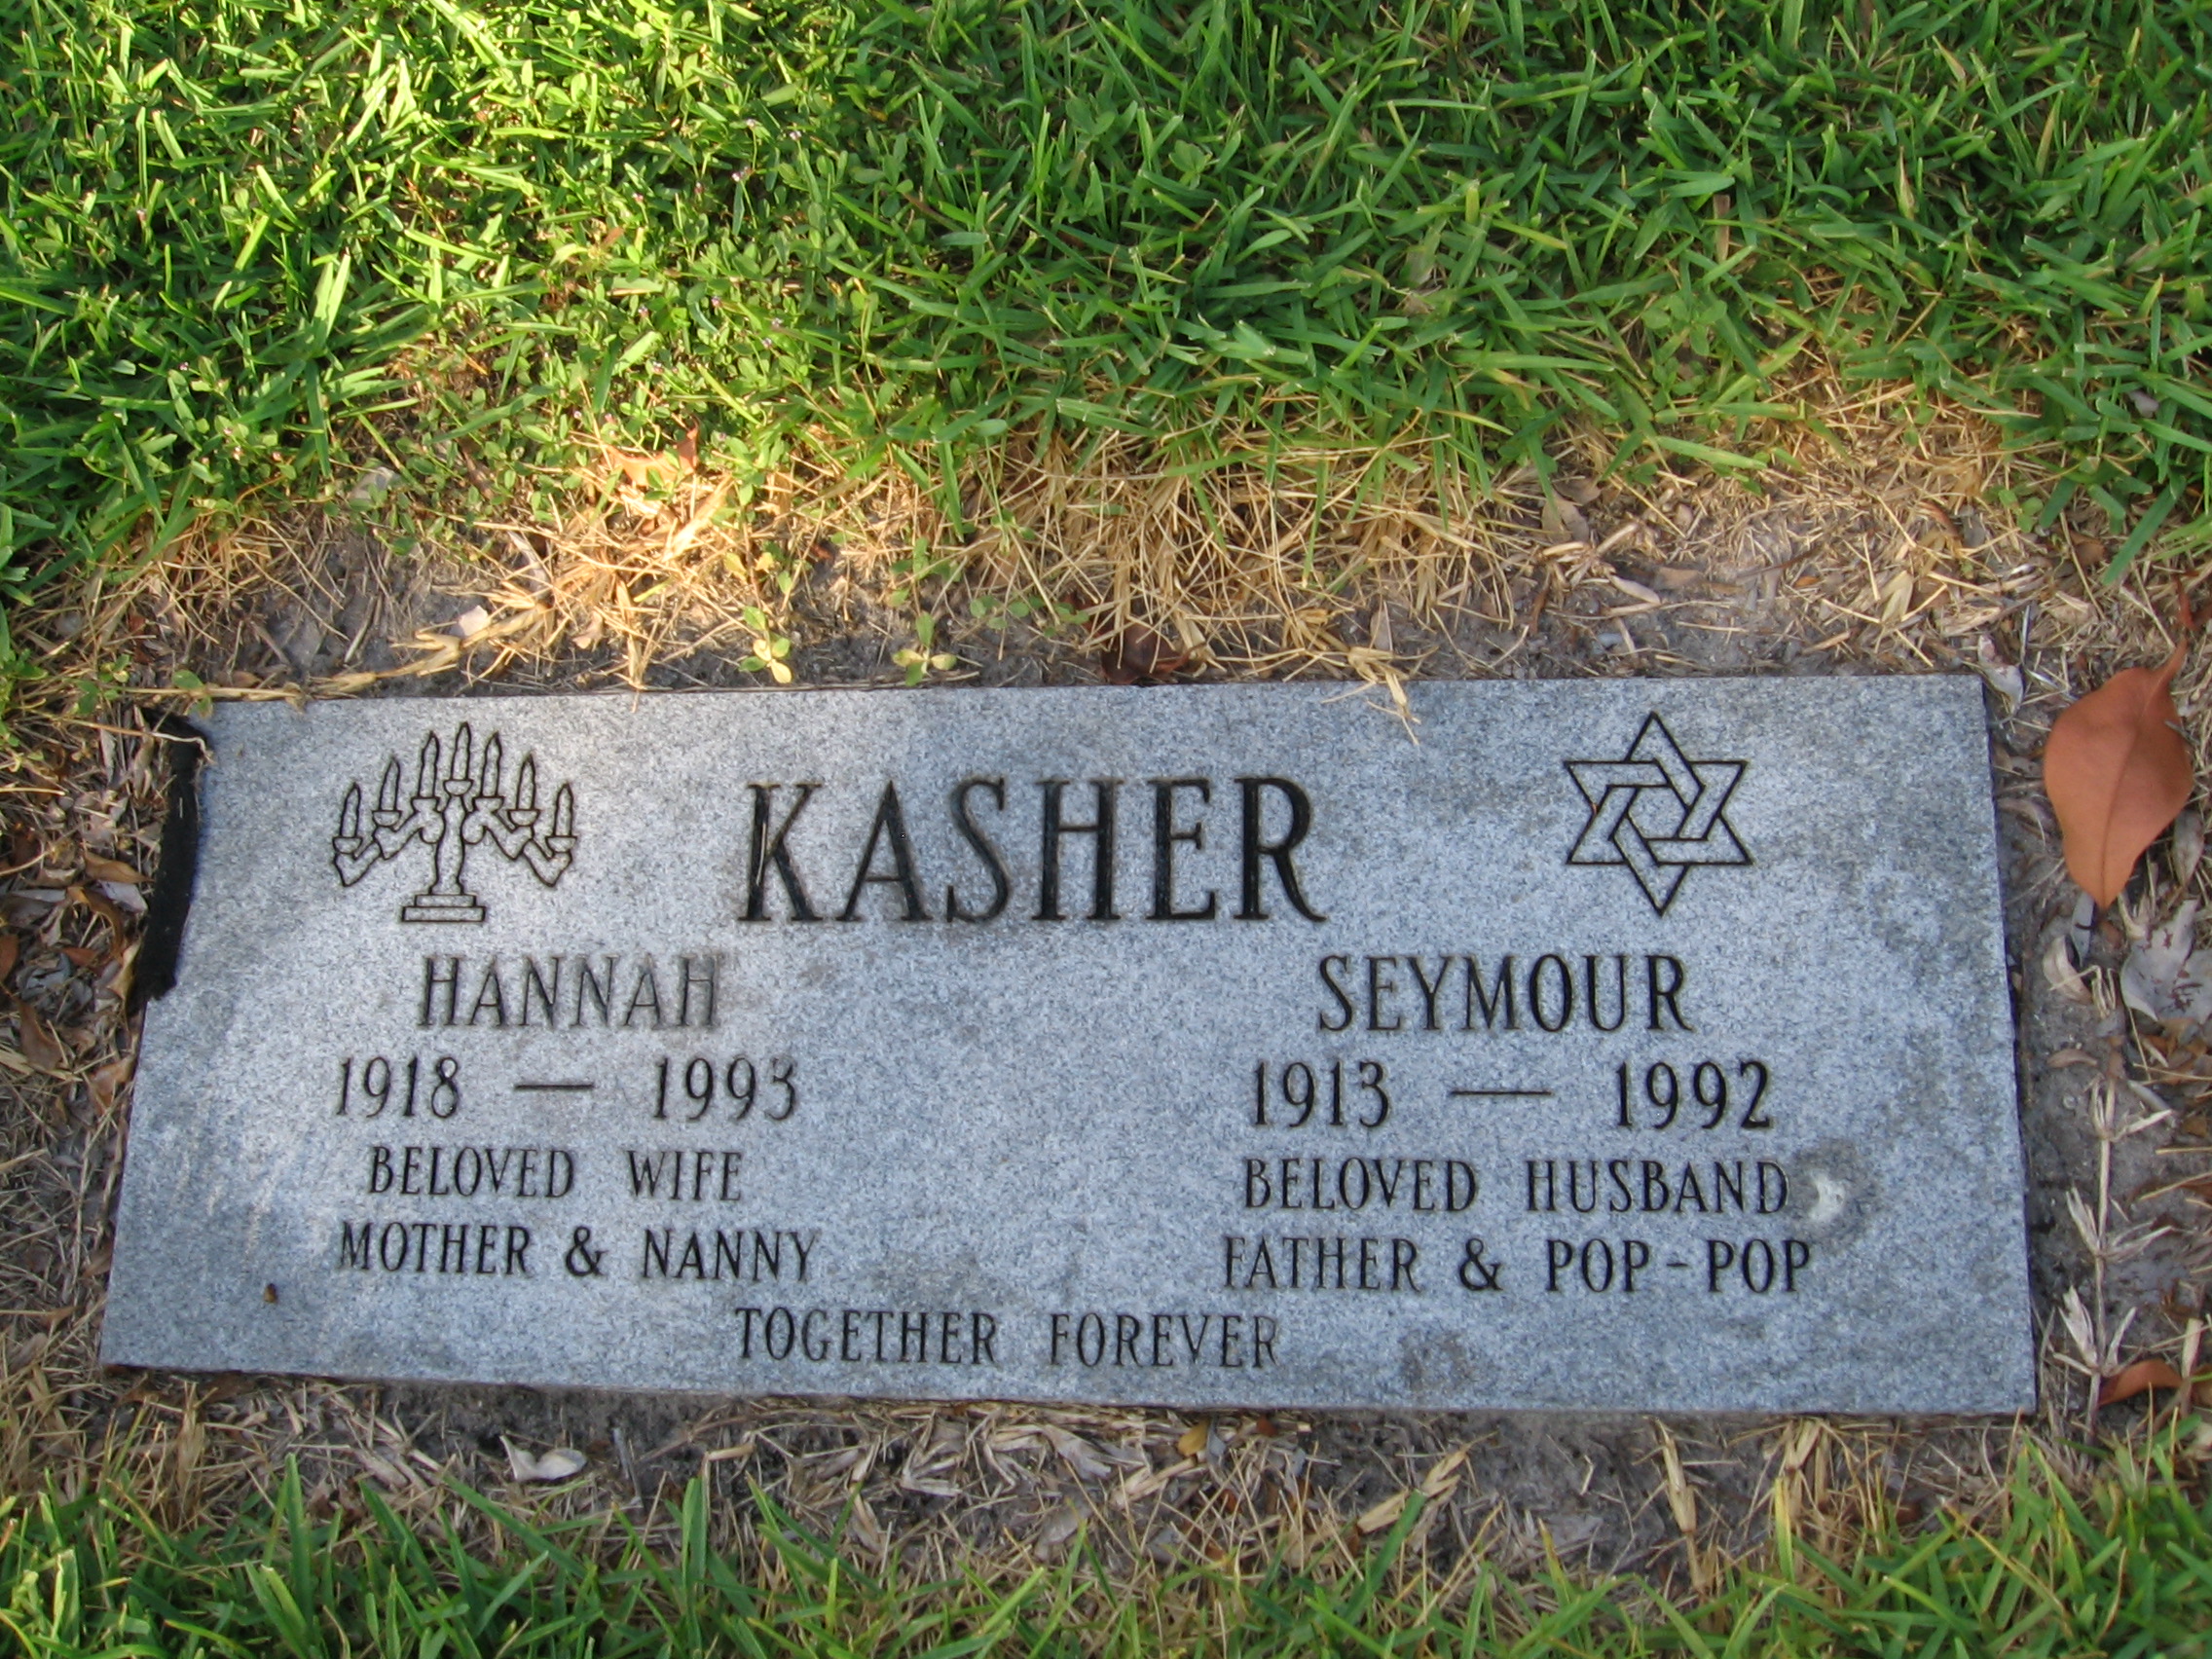 Seymour Kasher